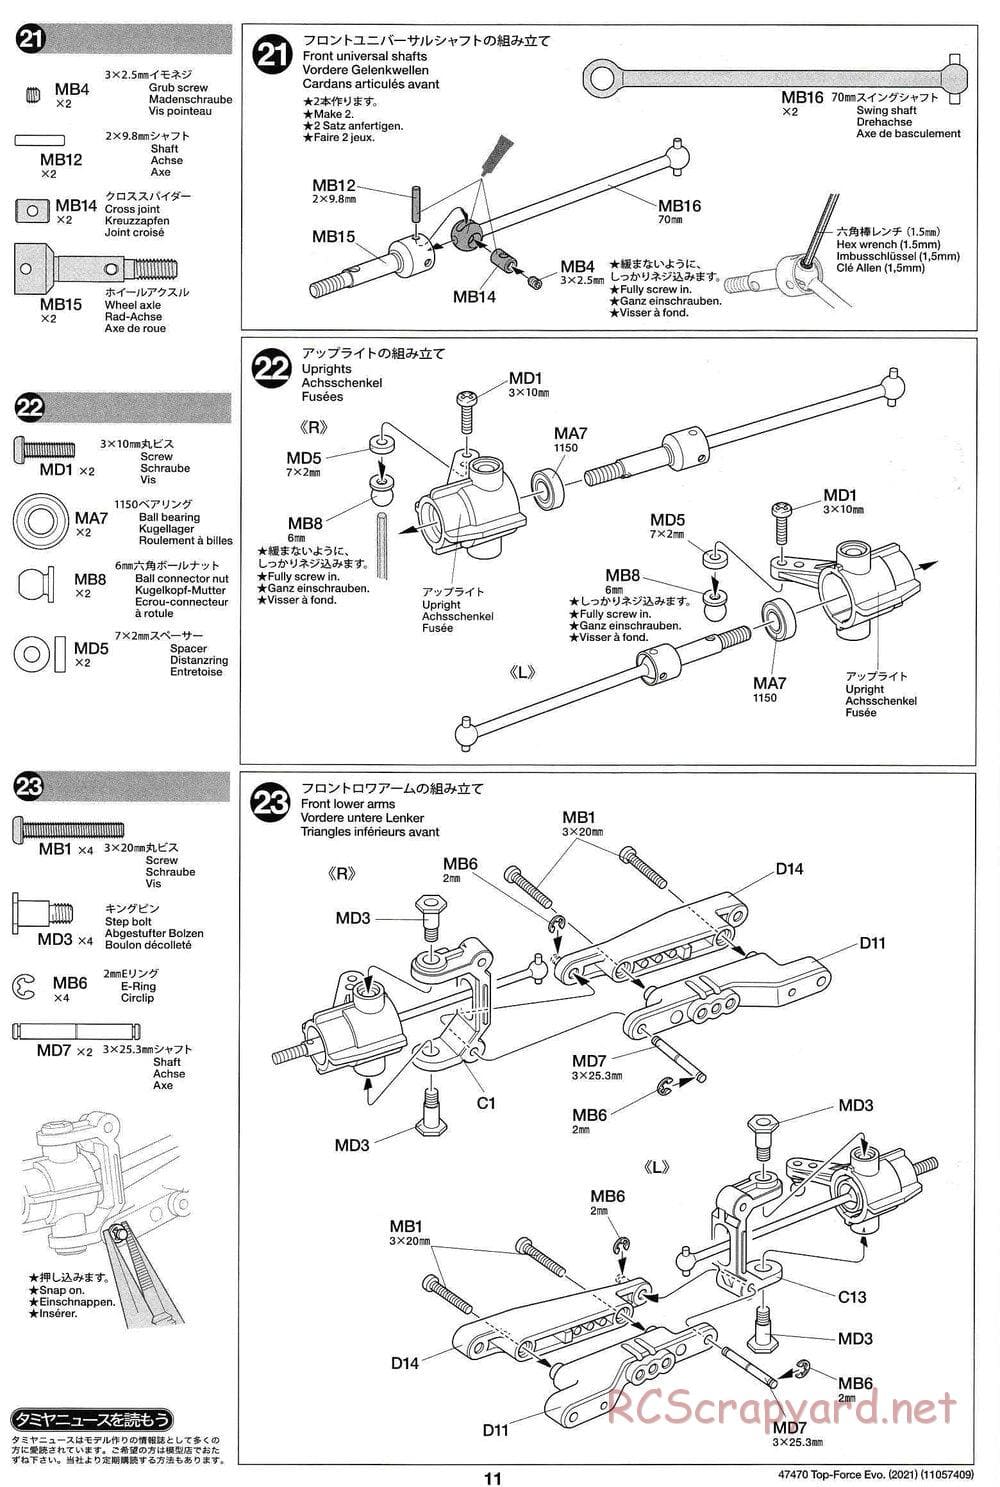 Tamiya - Top Force Evo 2021 - DF-01 Chassis - Manual - Page 11